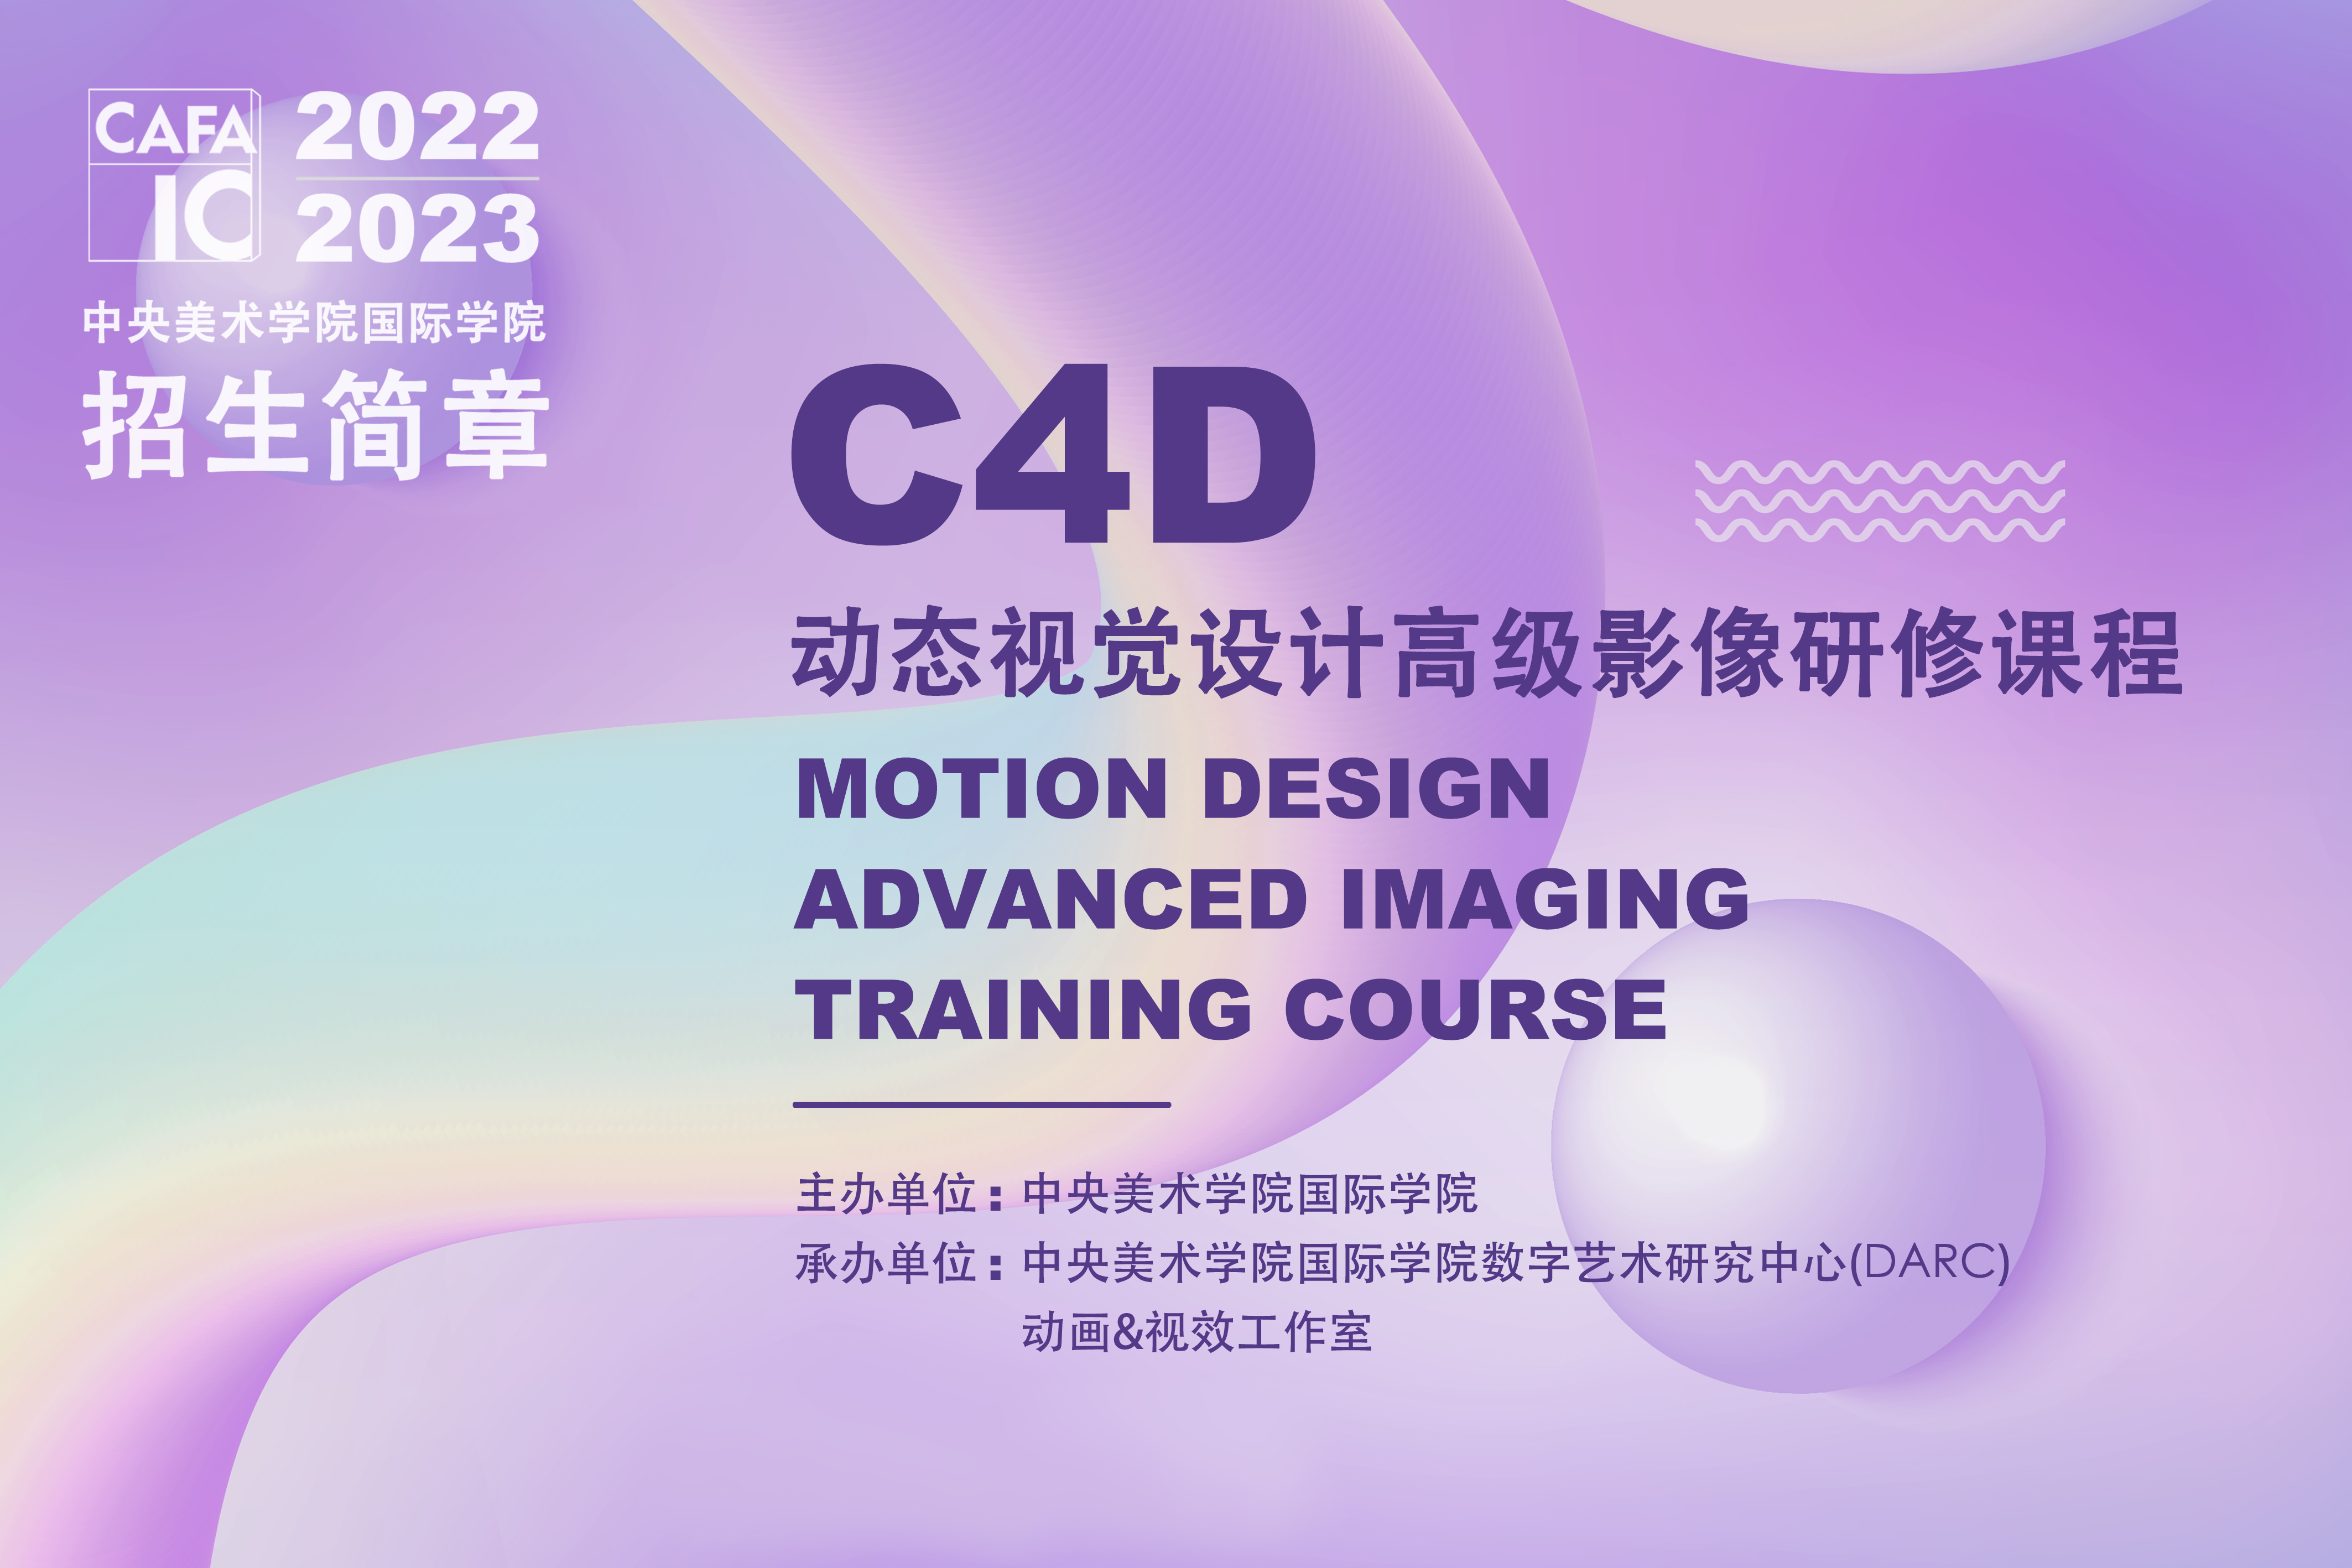 C4D动态视觉设计高级影像研修课程